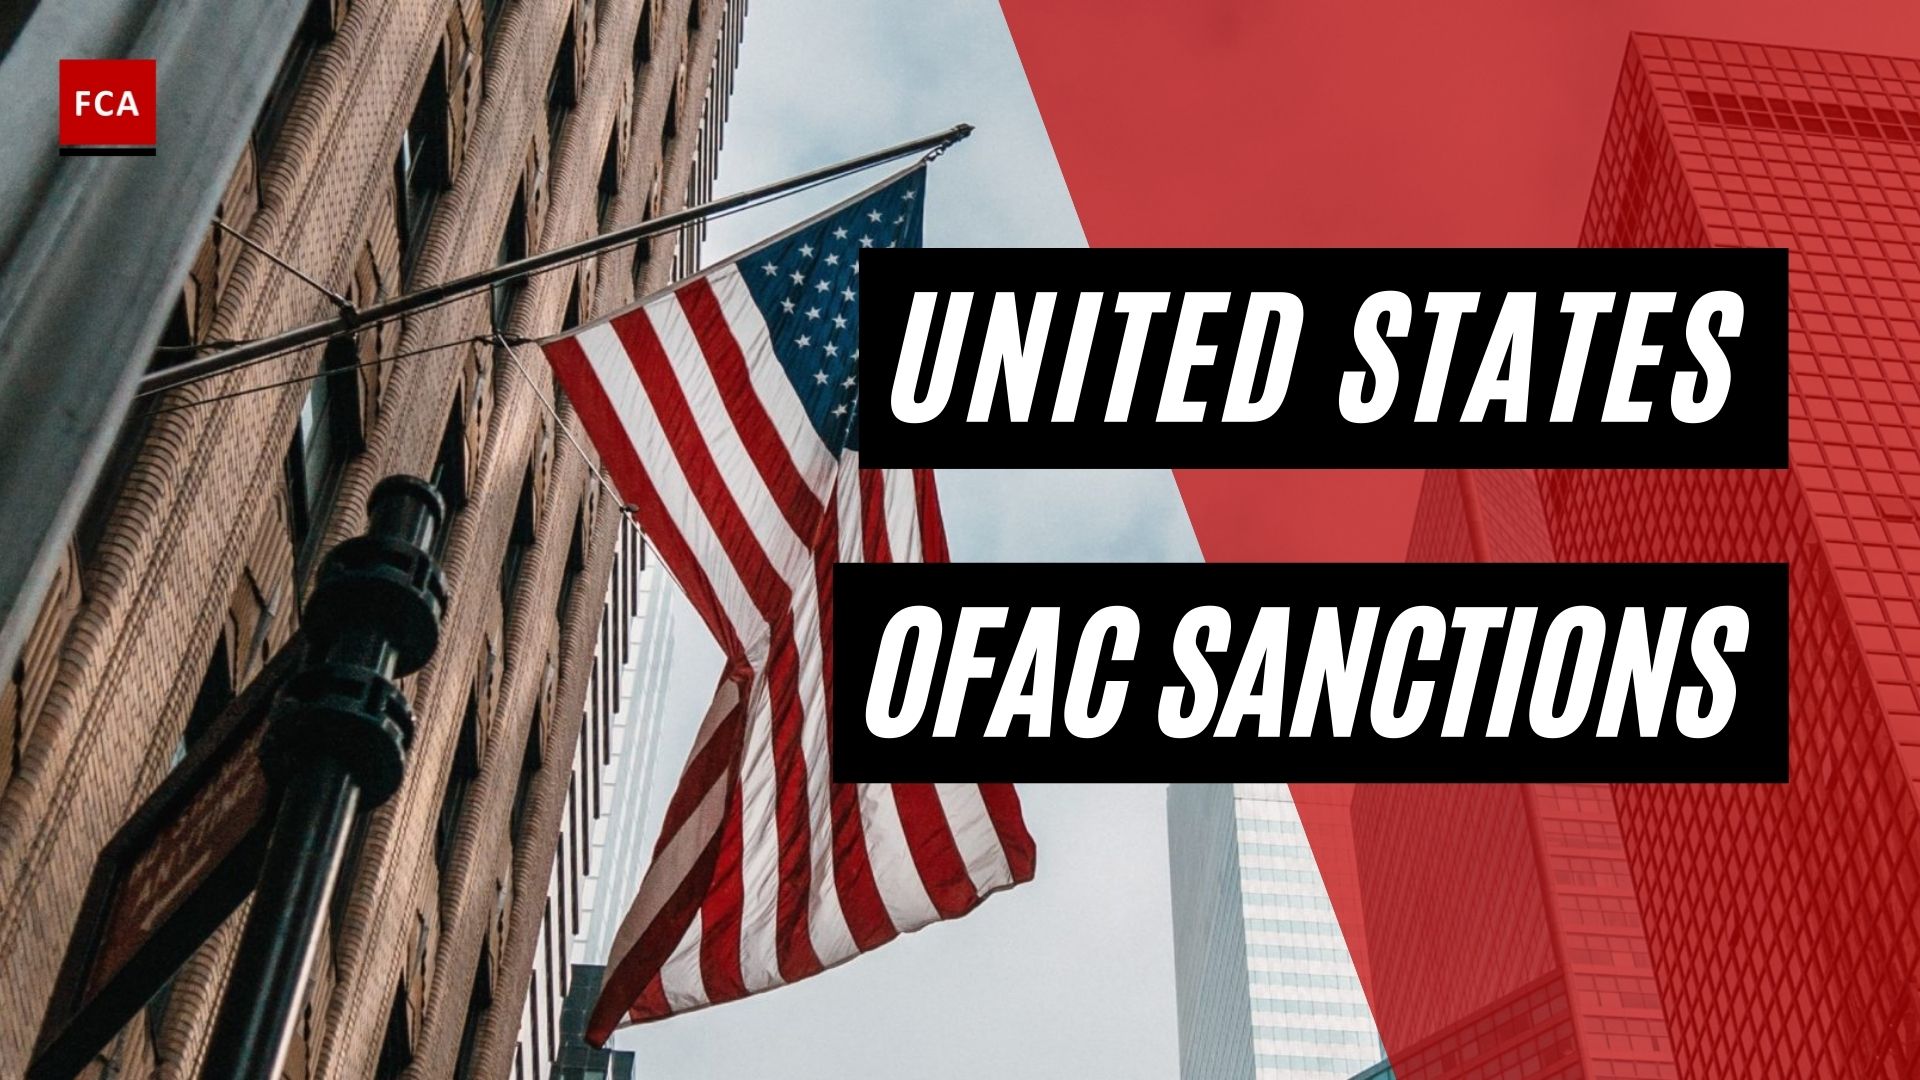 United States Ofac Sanctions